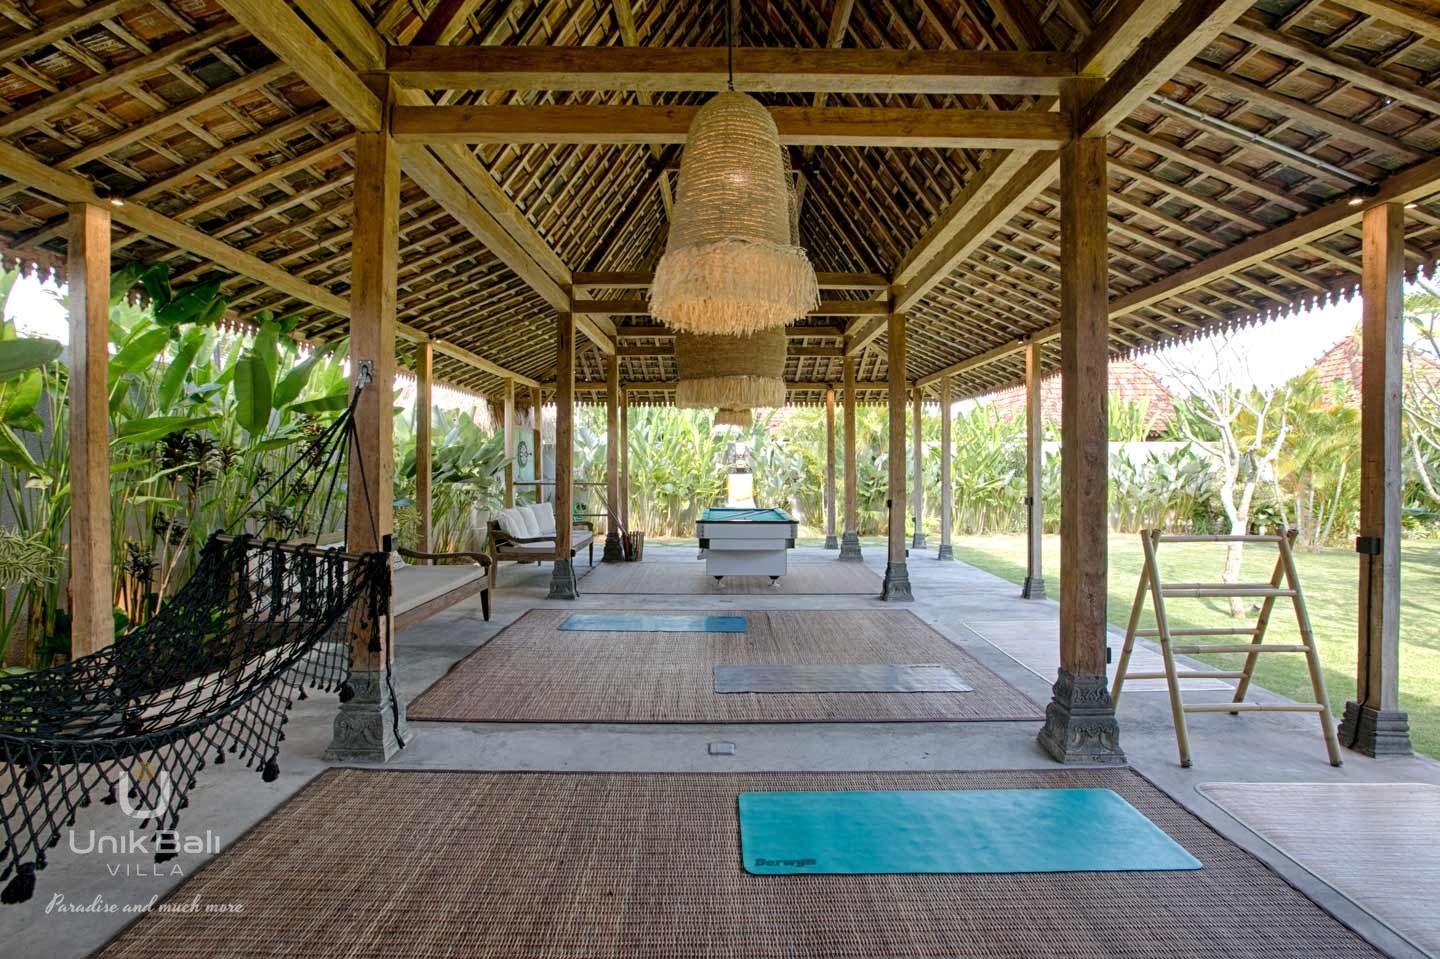 unik-bali-villa-for-rent-villa-naga-yoga-relaxation-area-pool-table